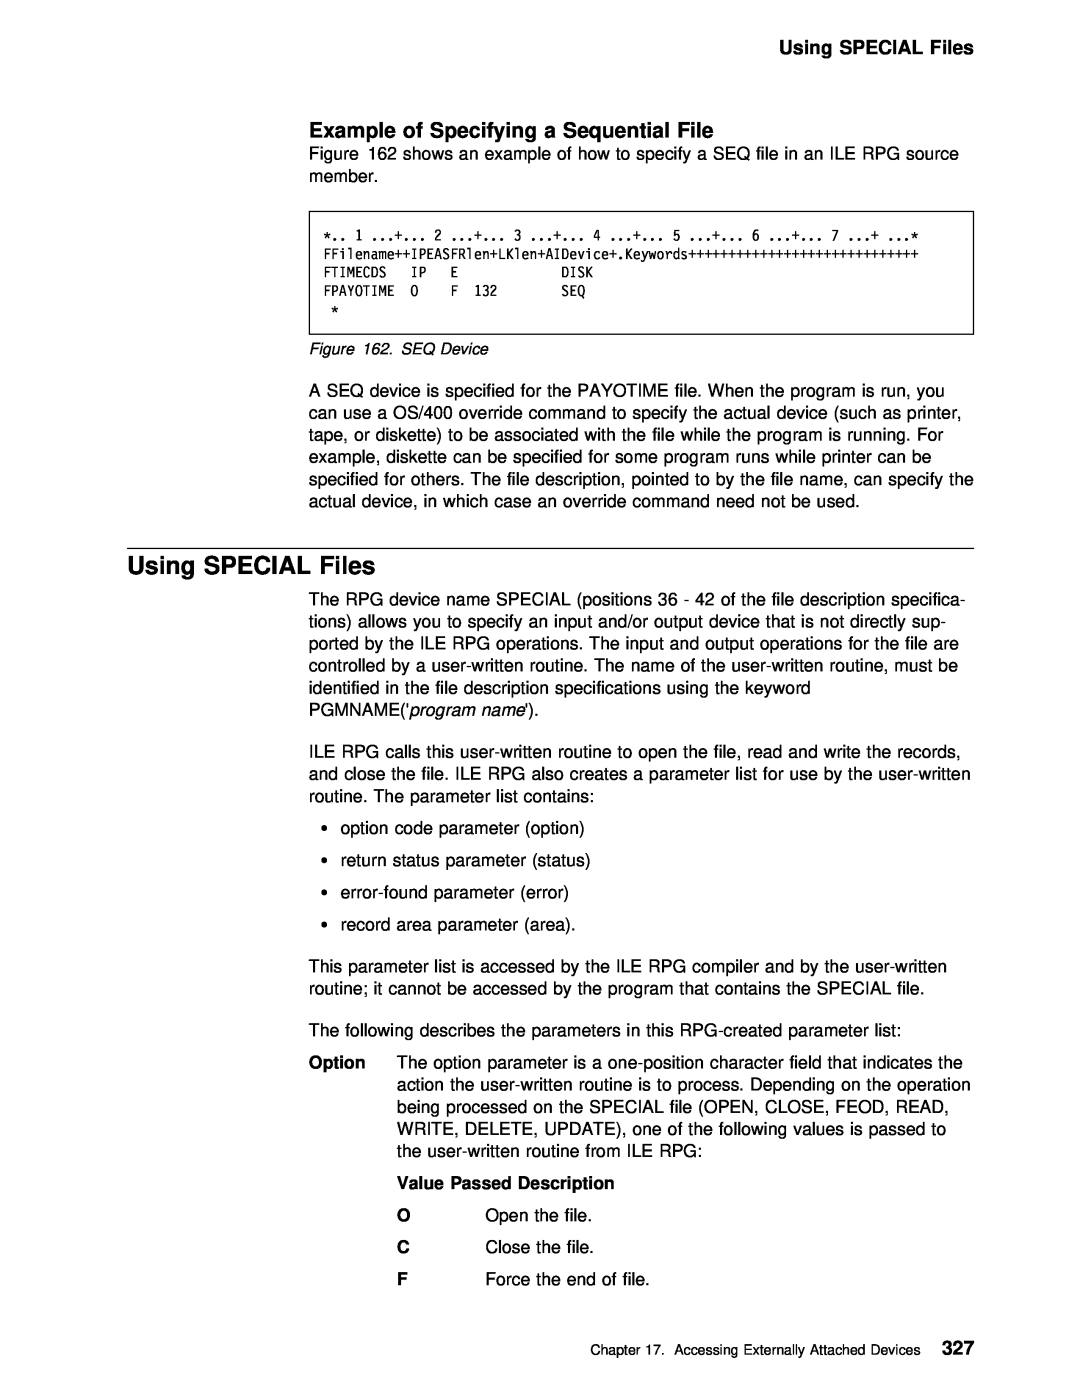 IBM AS/400 manual Using SPECIAL Files 